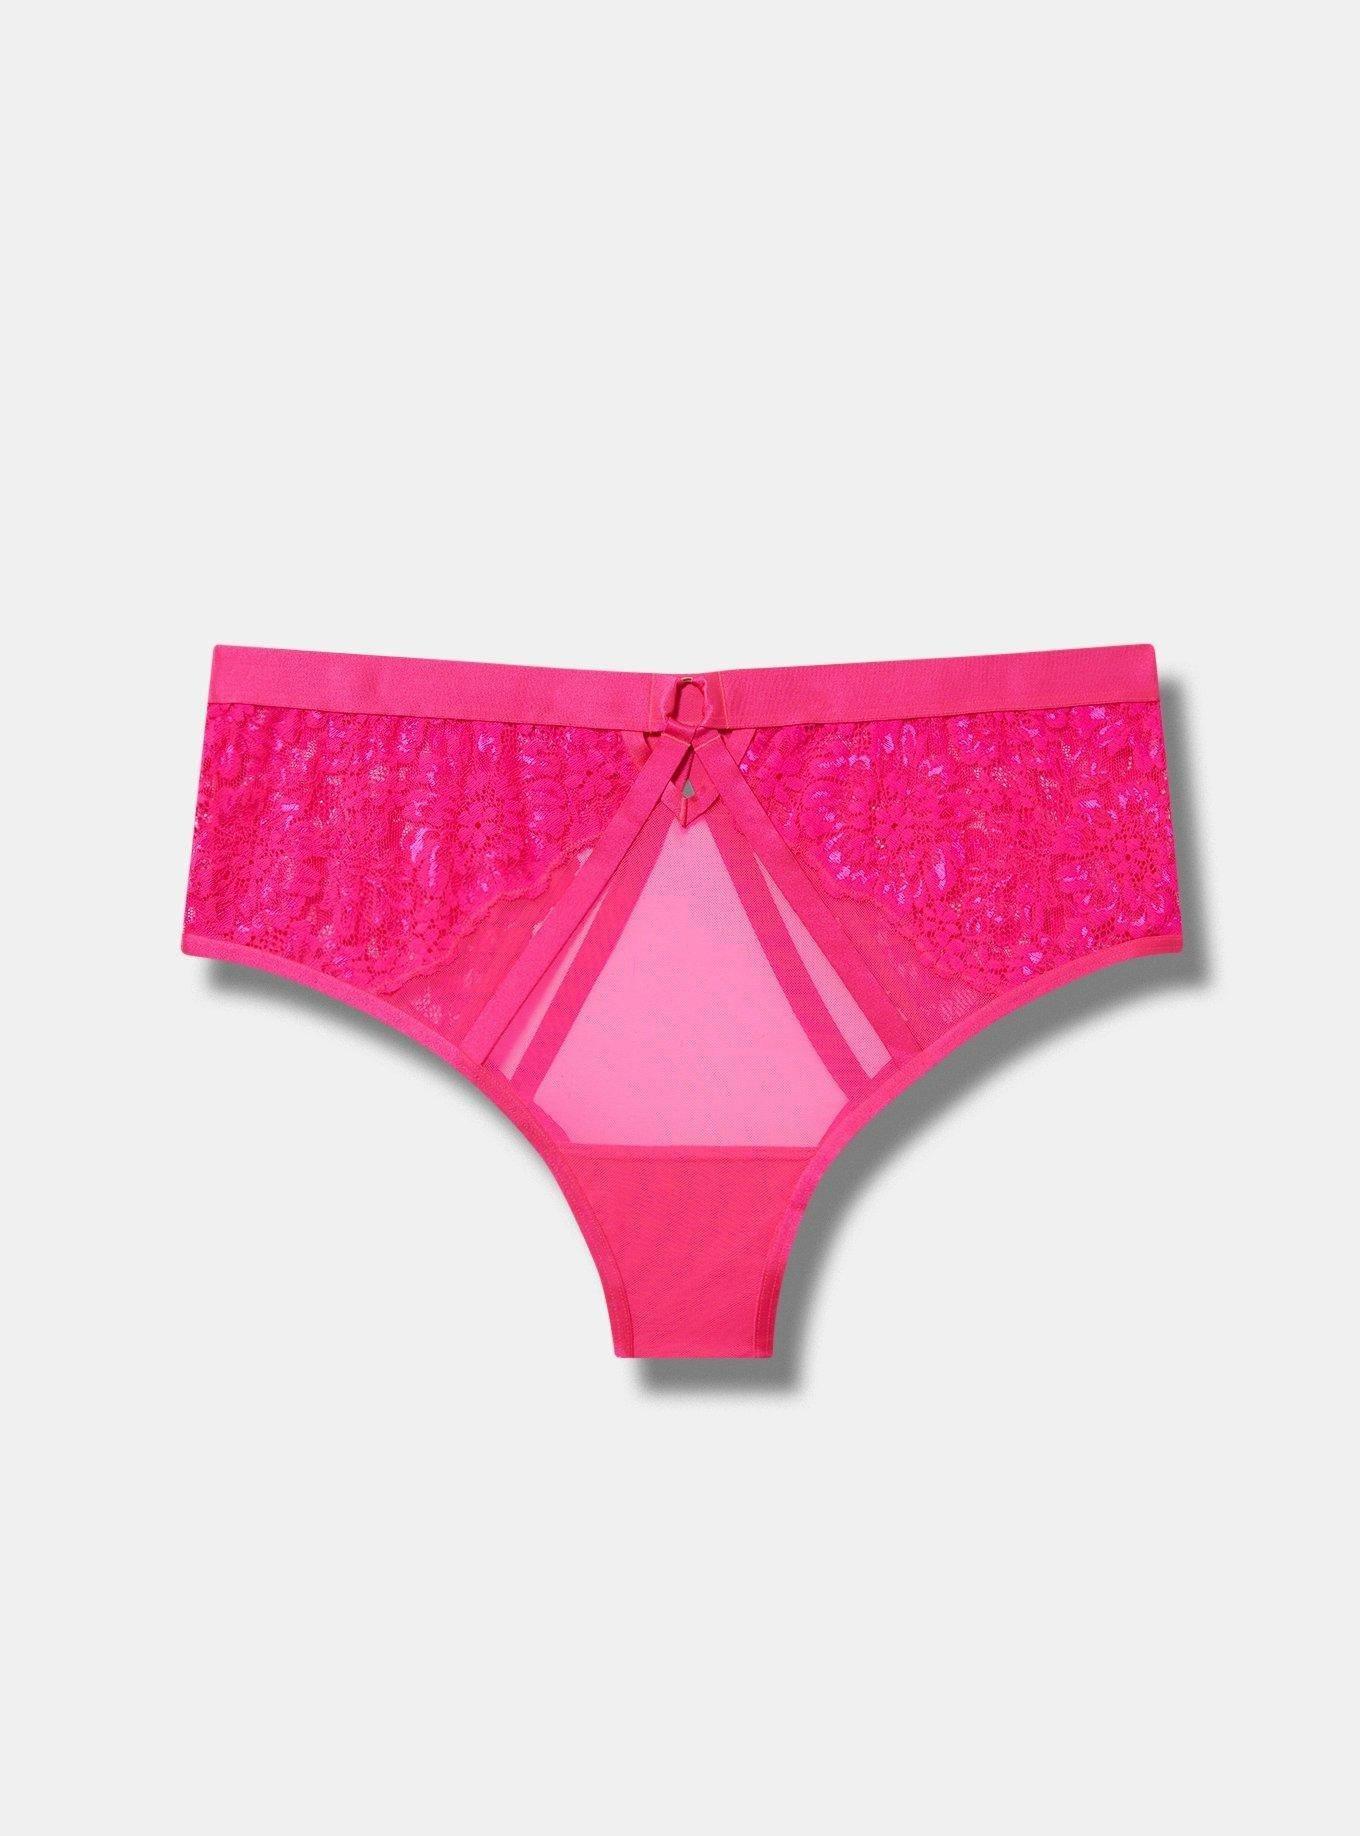 PINK Victoria's Secret, Intimates & Sleepwear, Pink Victorias Secret Lace  Strappy Thong Panty Set Of 3 Size M